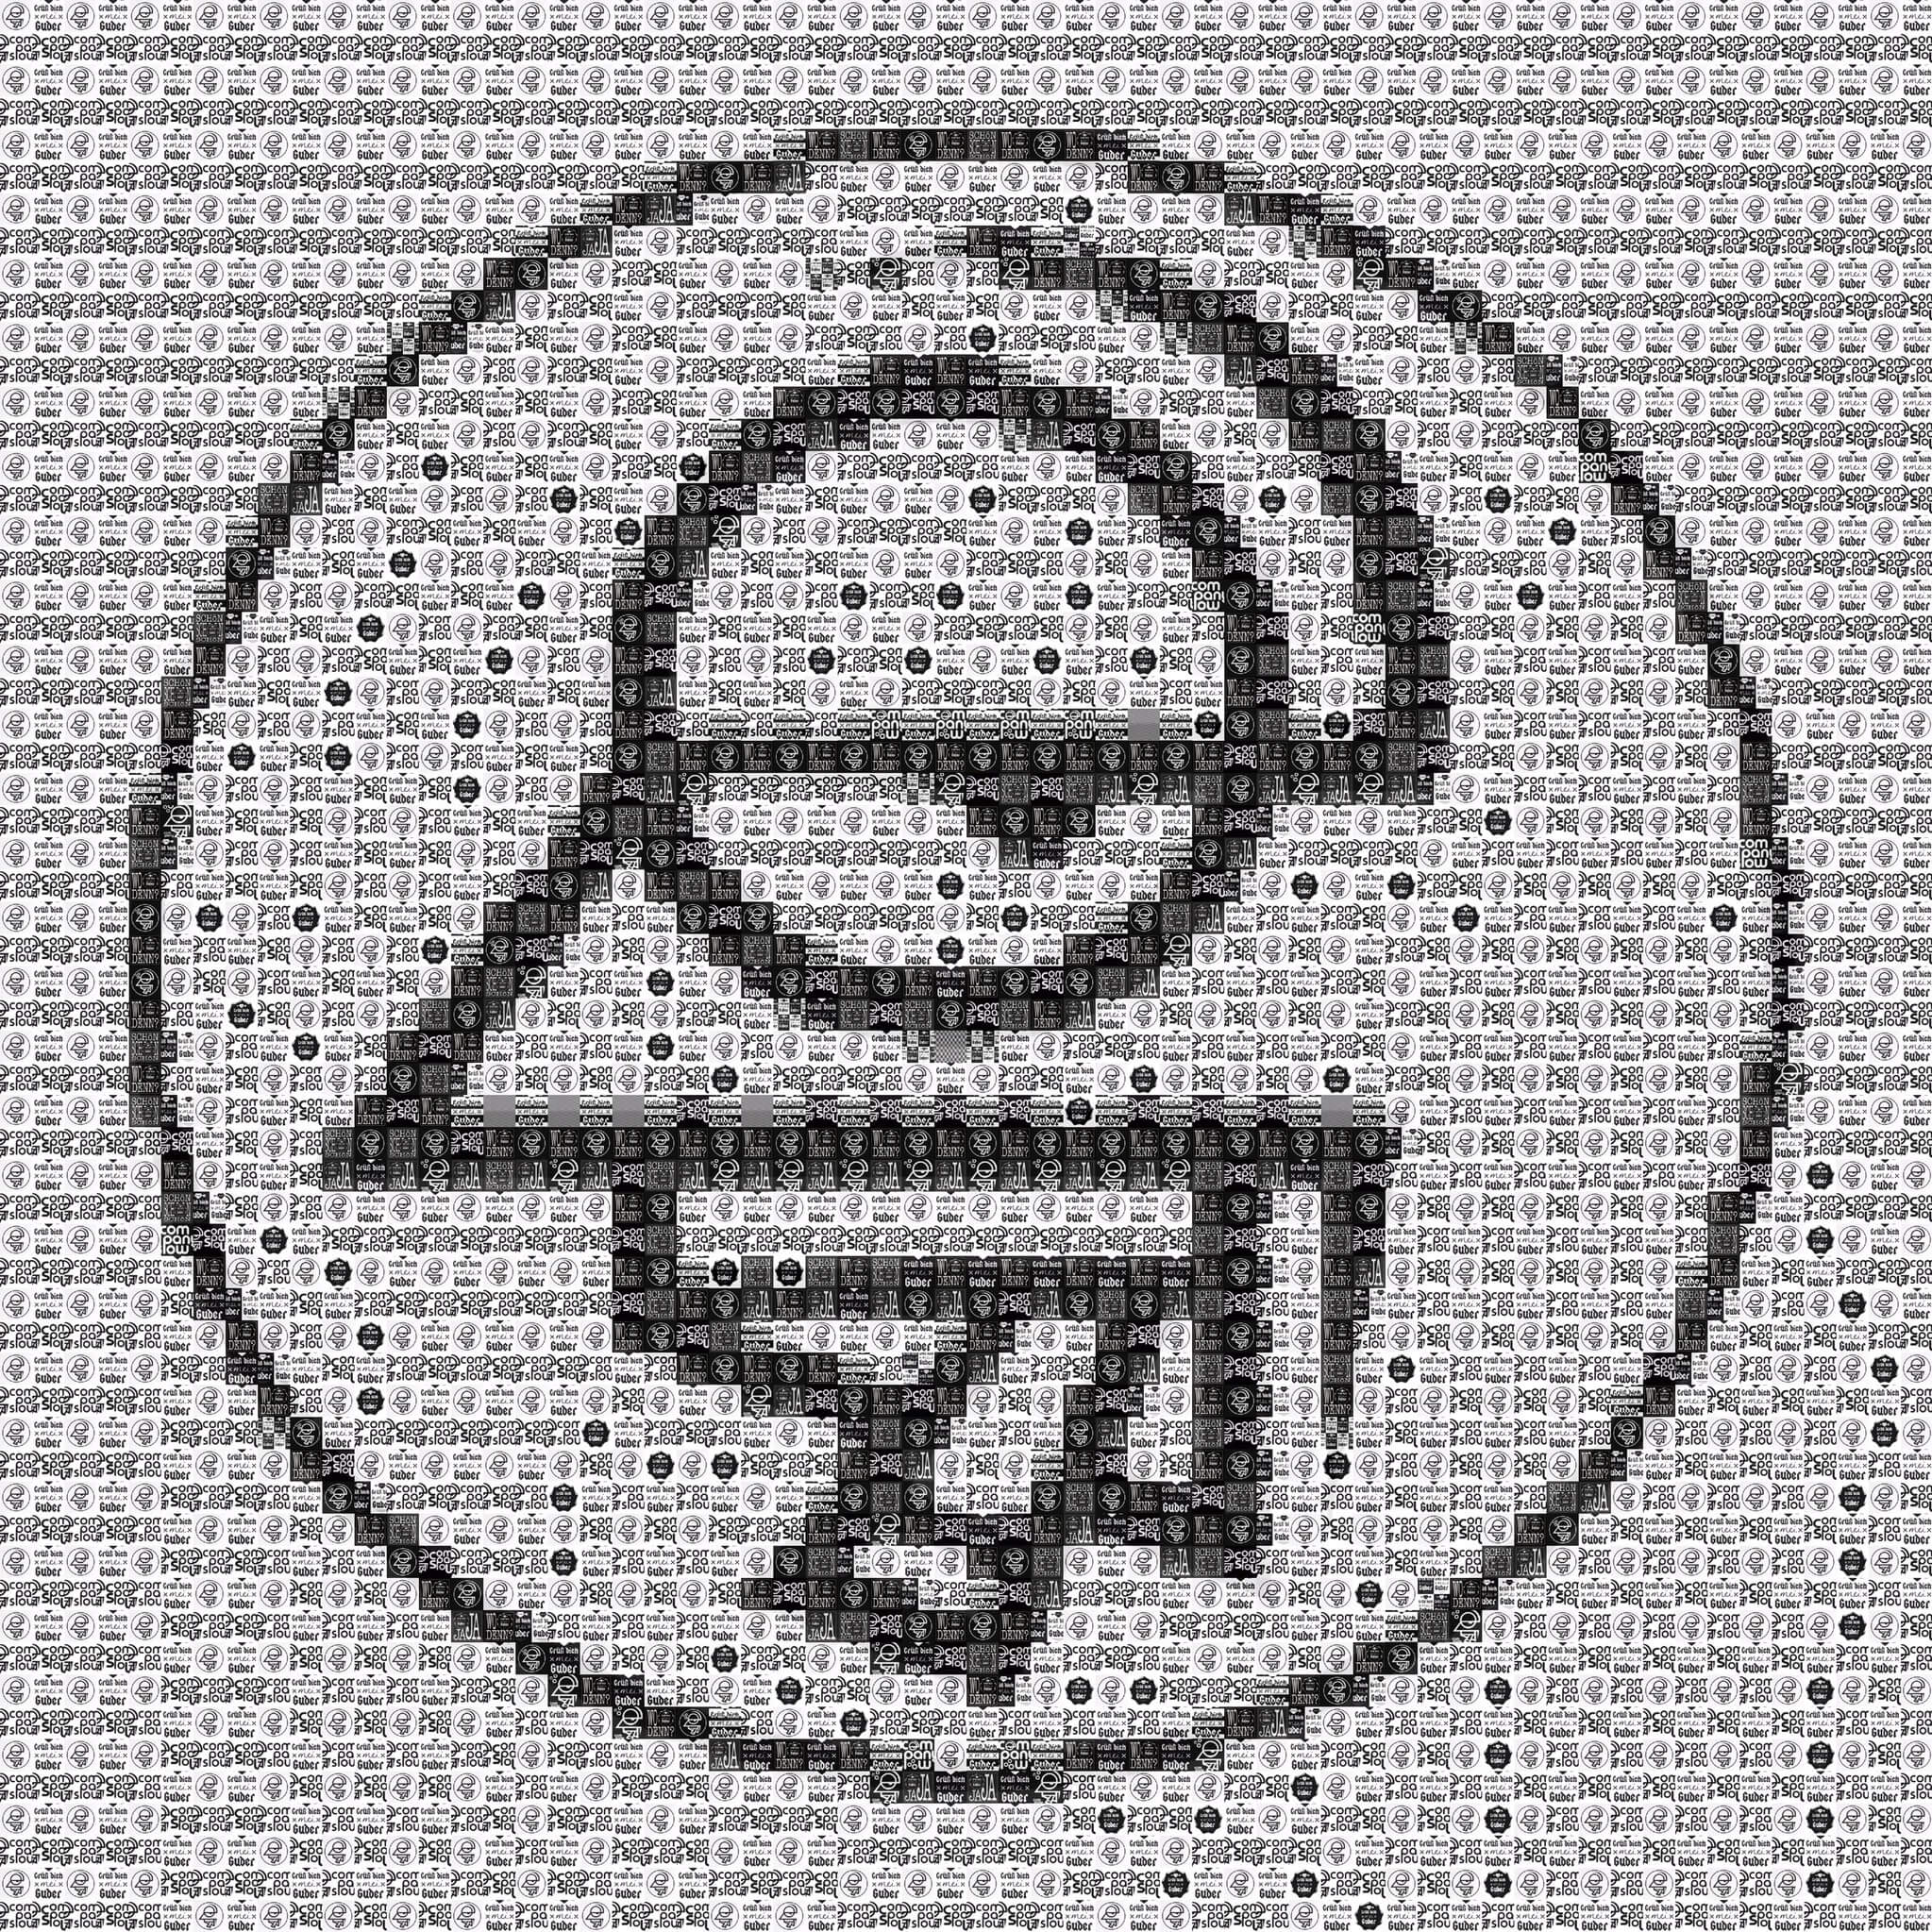 Pixel Art, Mosaik, Sticker, "Company Slow" Logo weiß